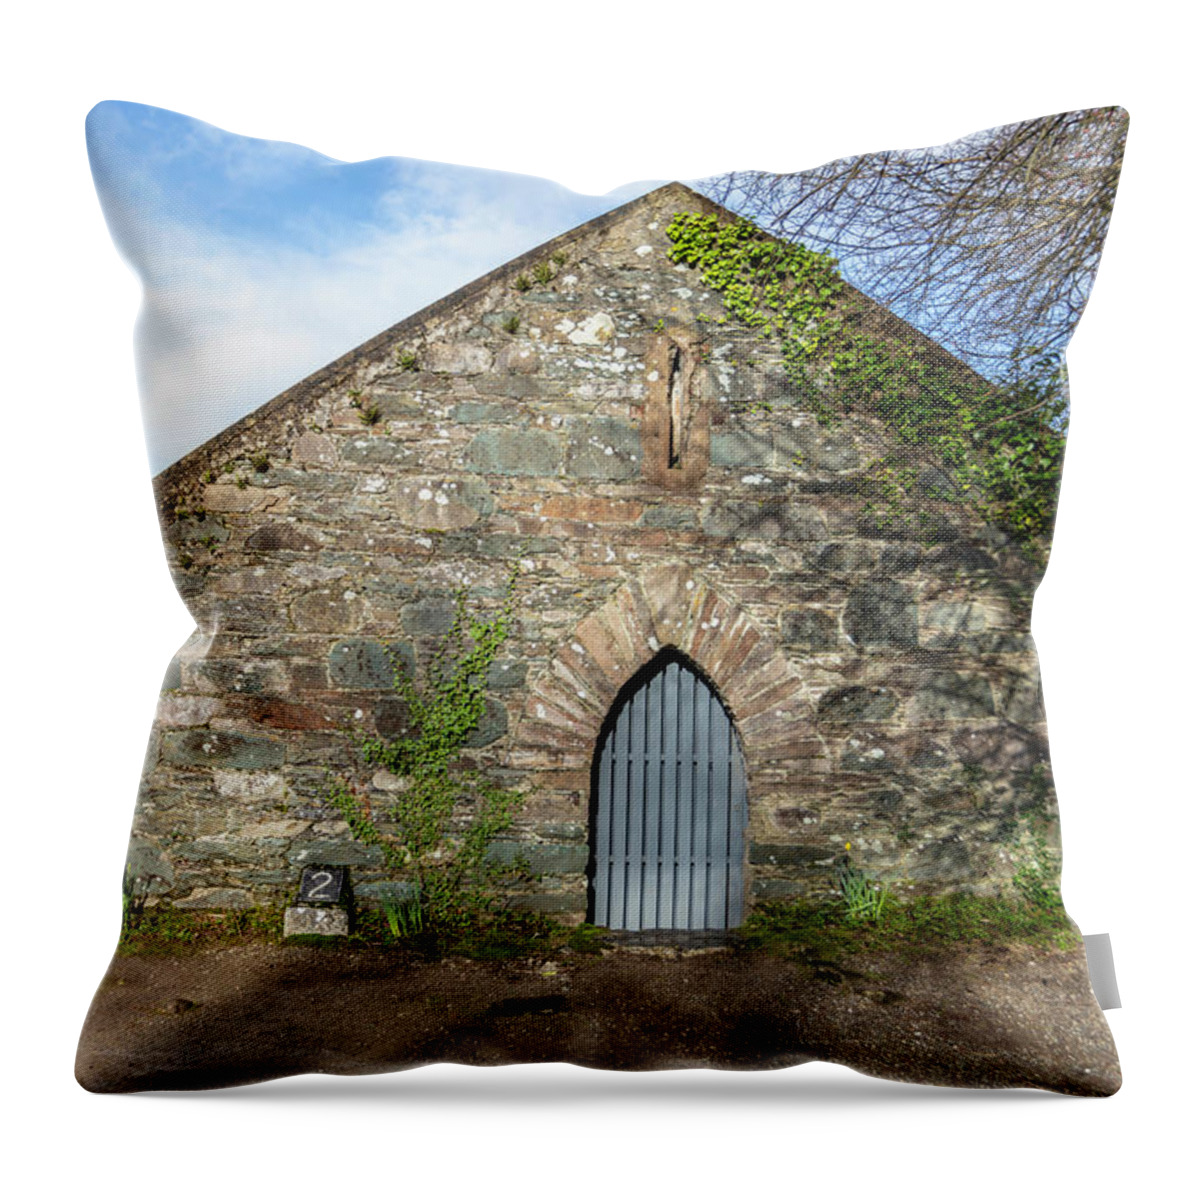 Killarney National Park Throw Pillow featuring the photograph Killarney National Park Boathouse by John McGraw